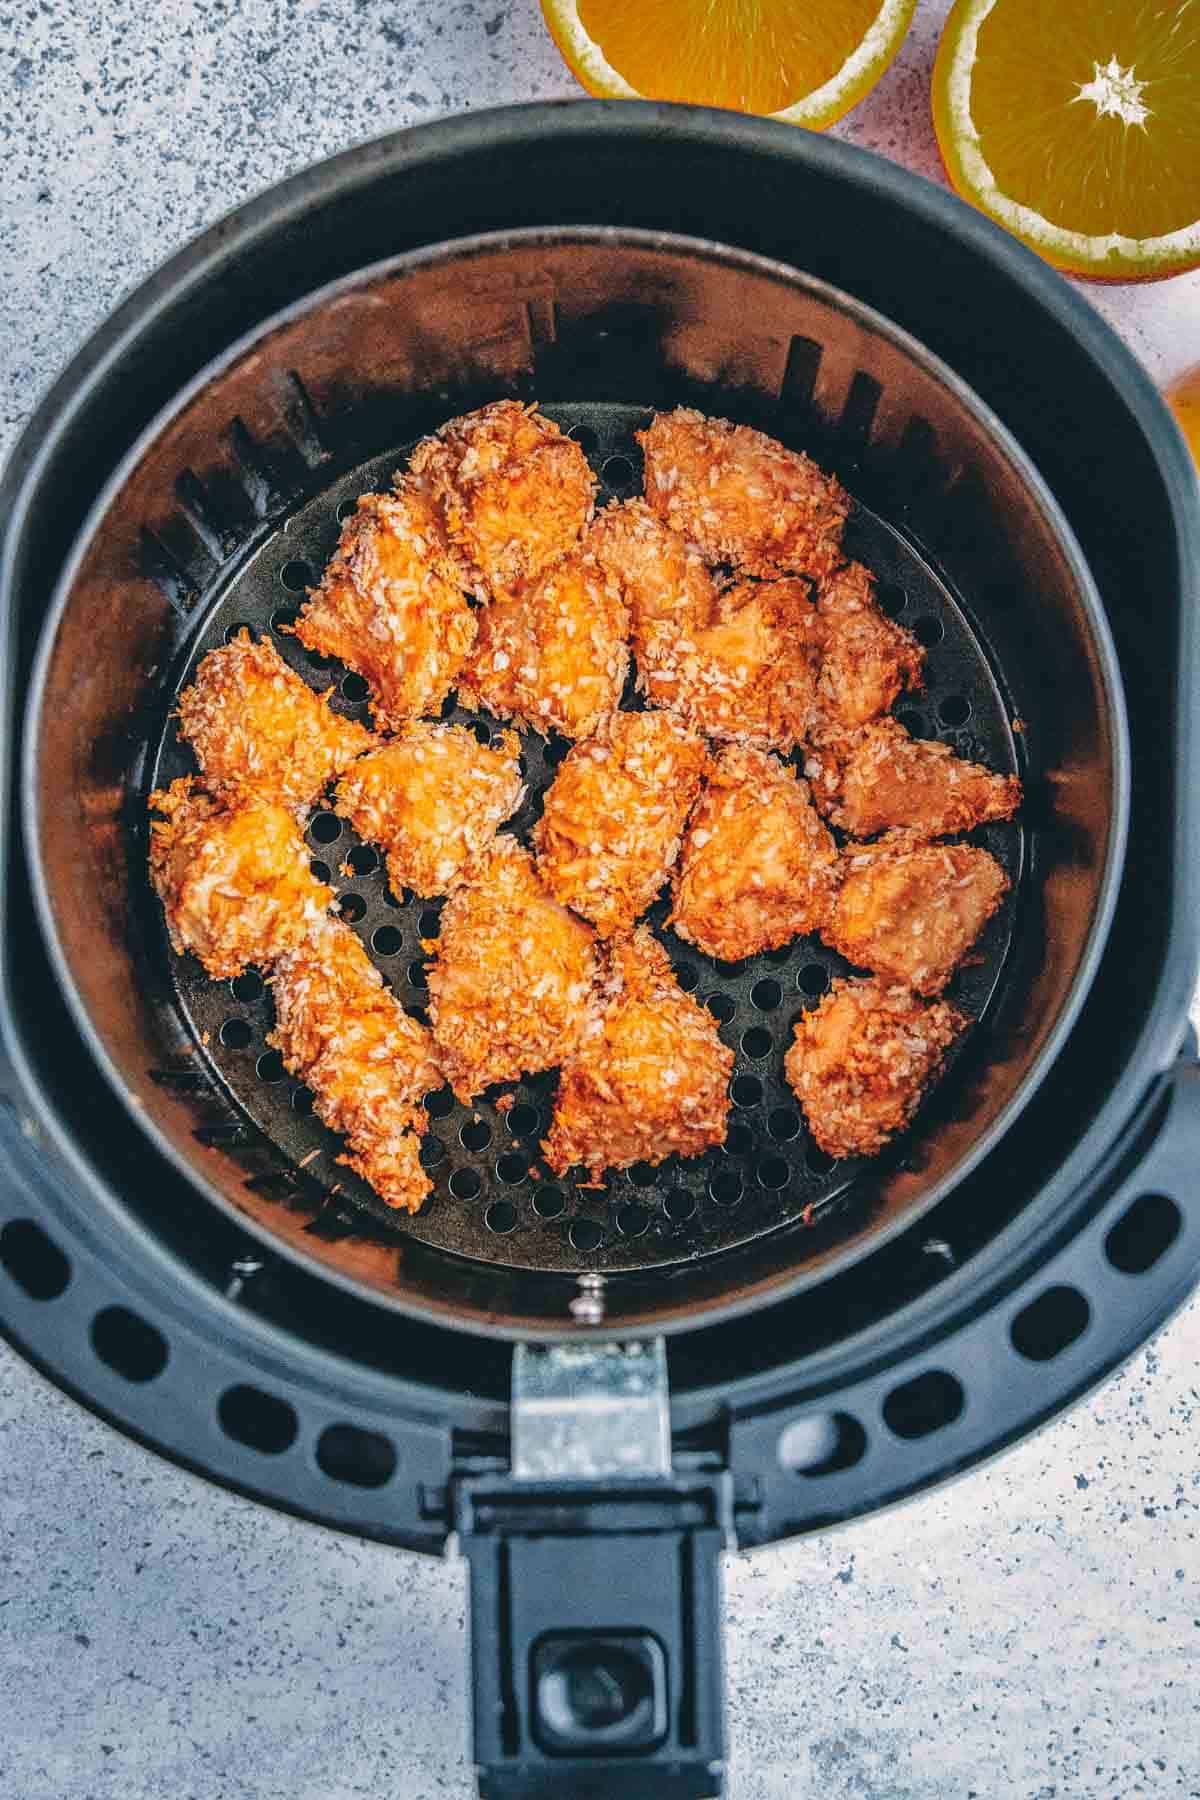 Orange chicken in the air fryer basket cooked to golden brown.